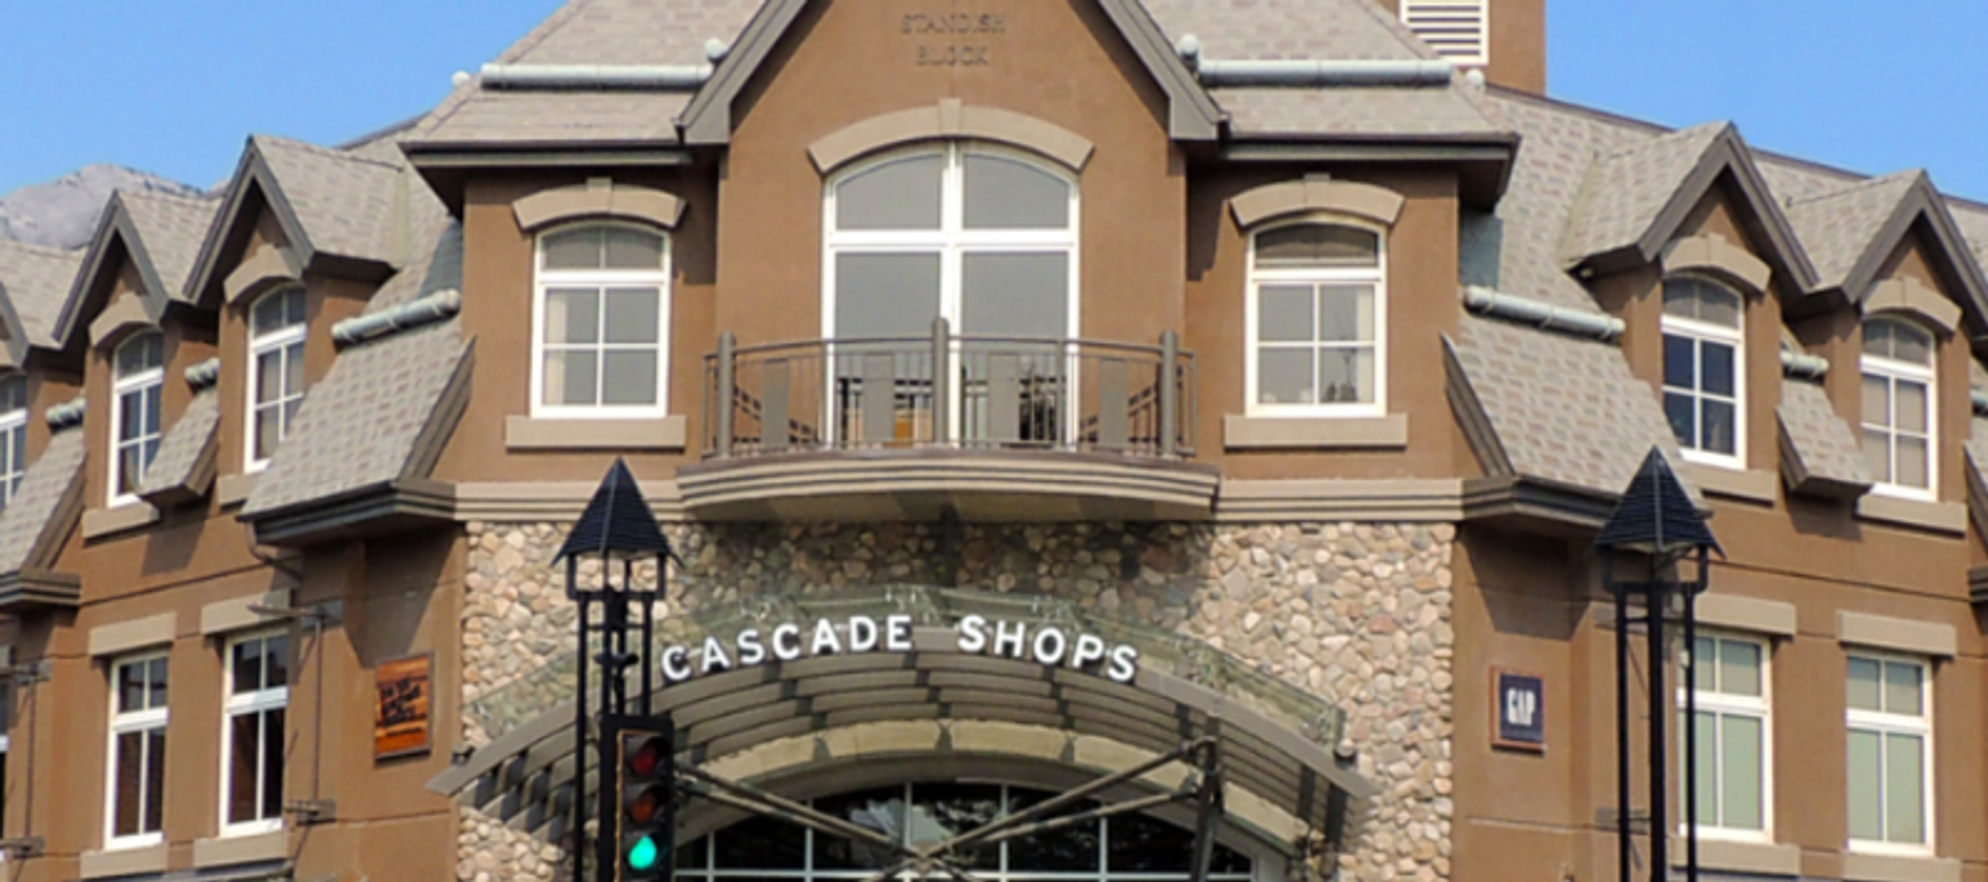 Cascade Shops